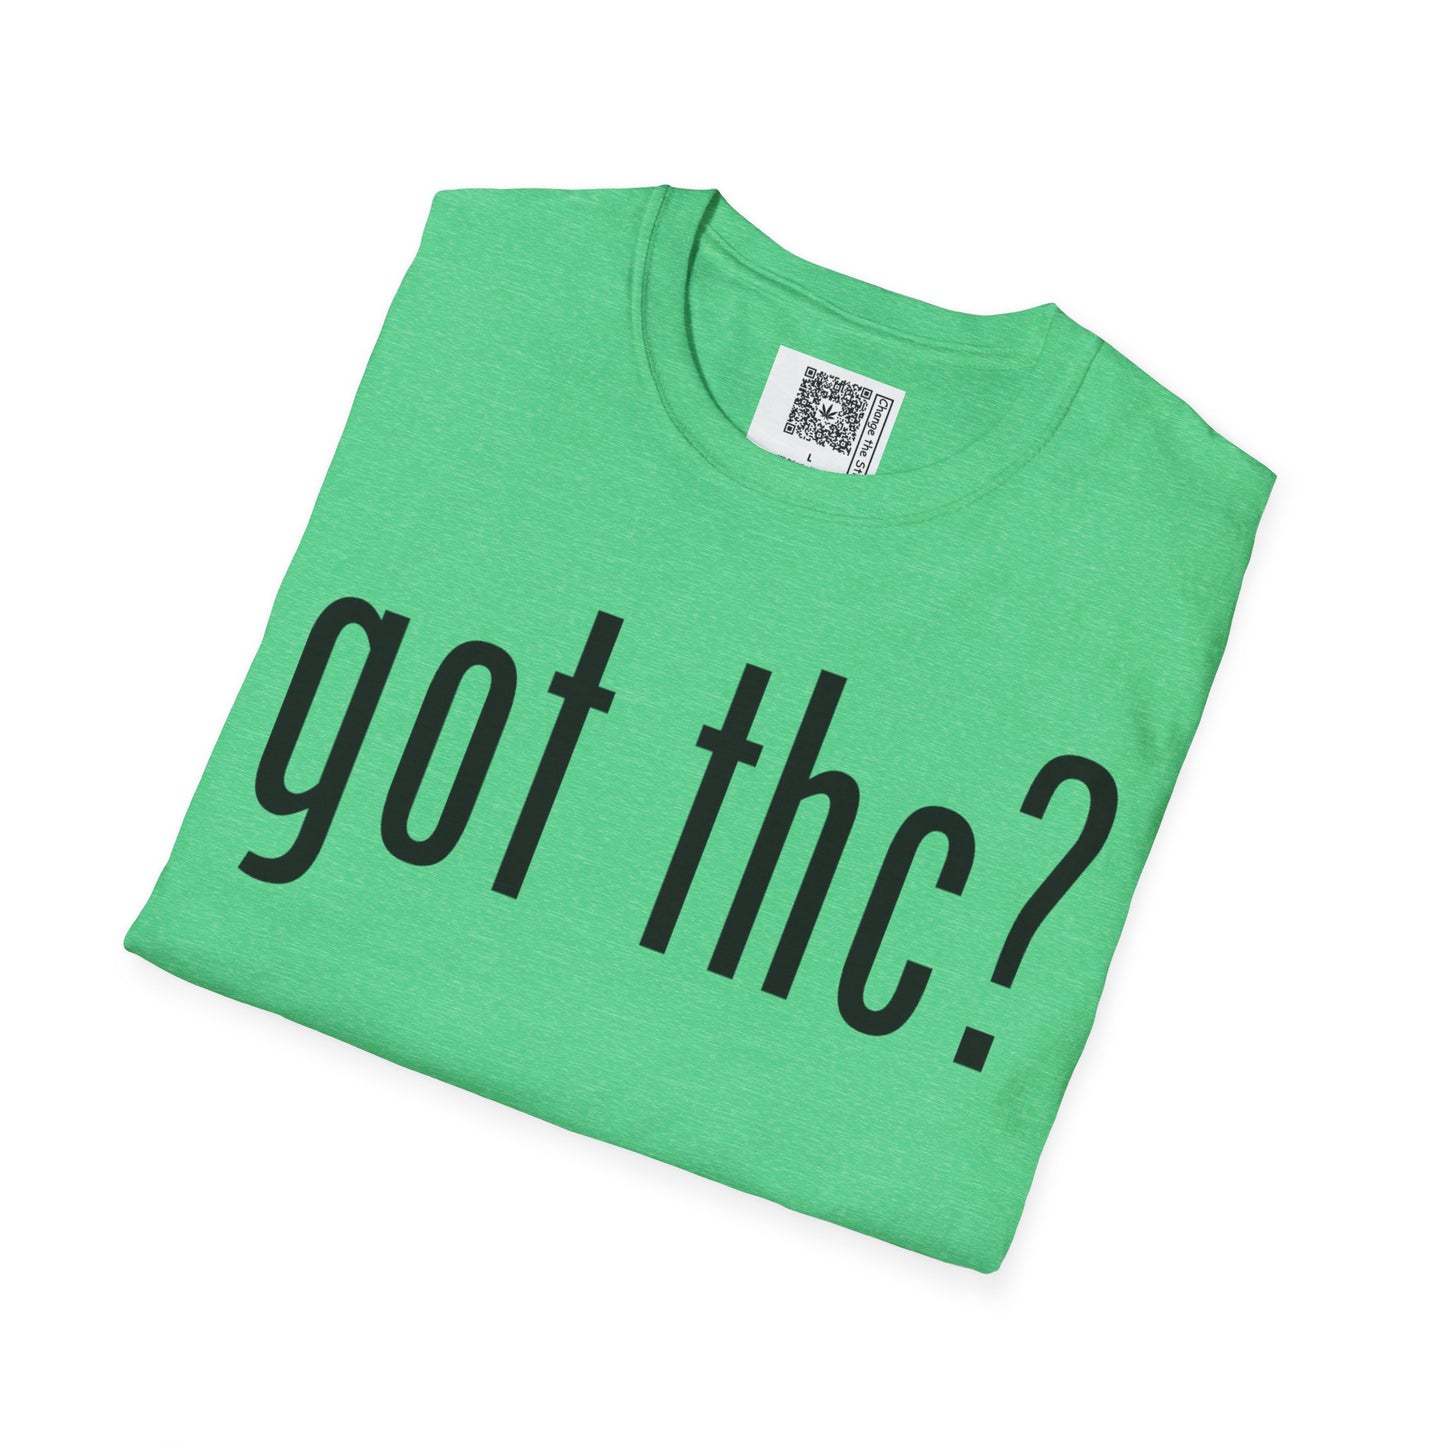 Change the Stigma GOT THC Weed Shirt